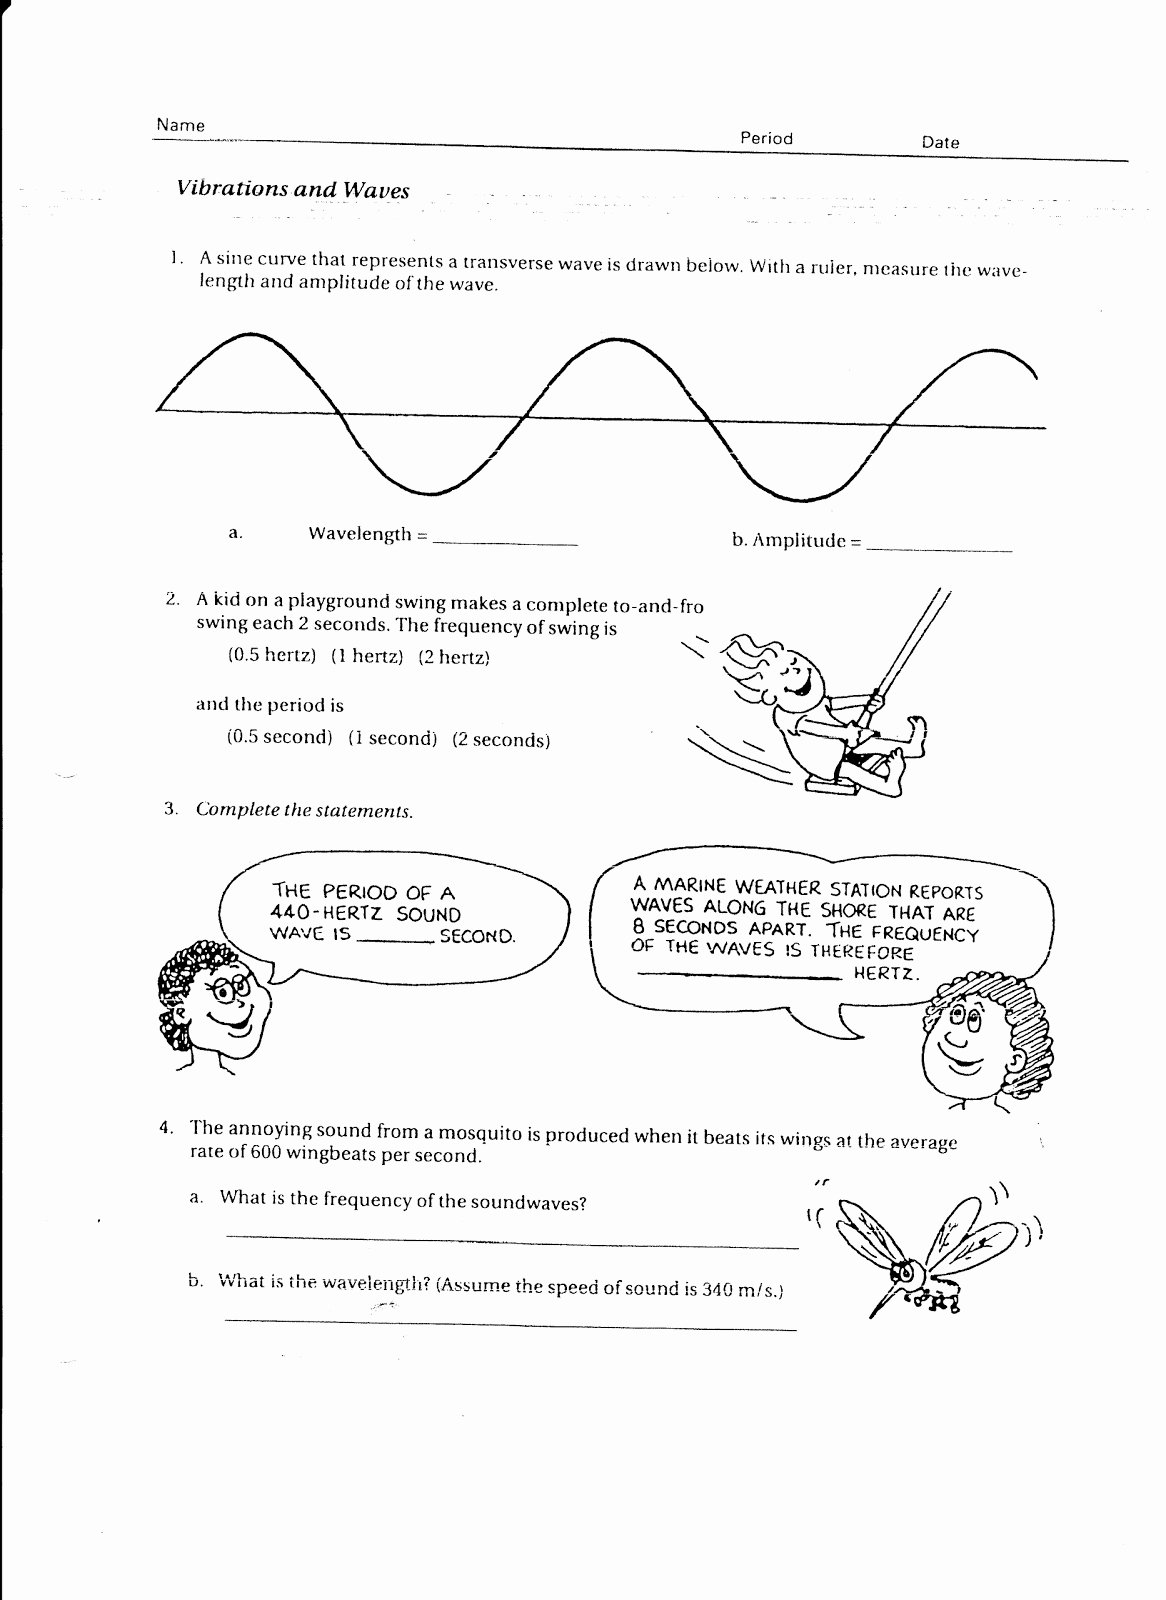 Waves Worksheet Answer Key Elegant Physics Due Wed Feb 16 Waves and Vibrations Worksheet